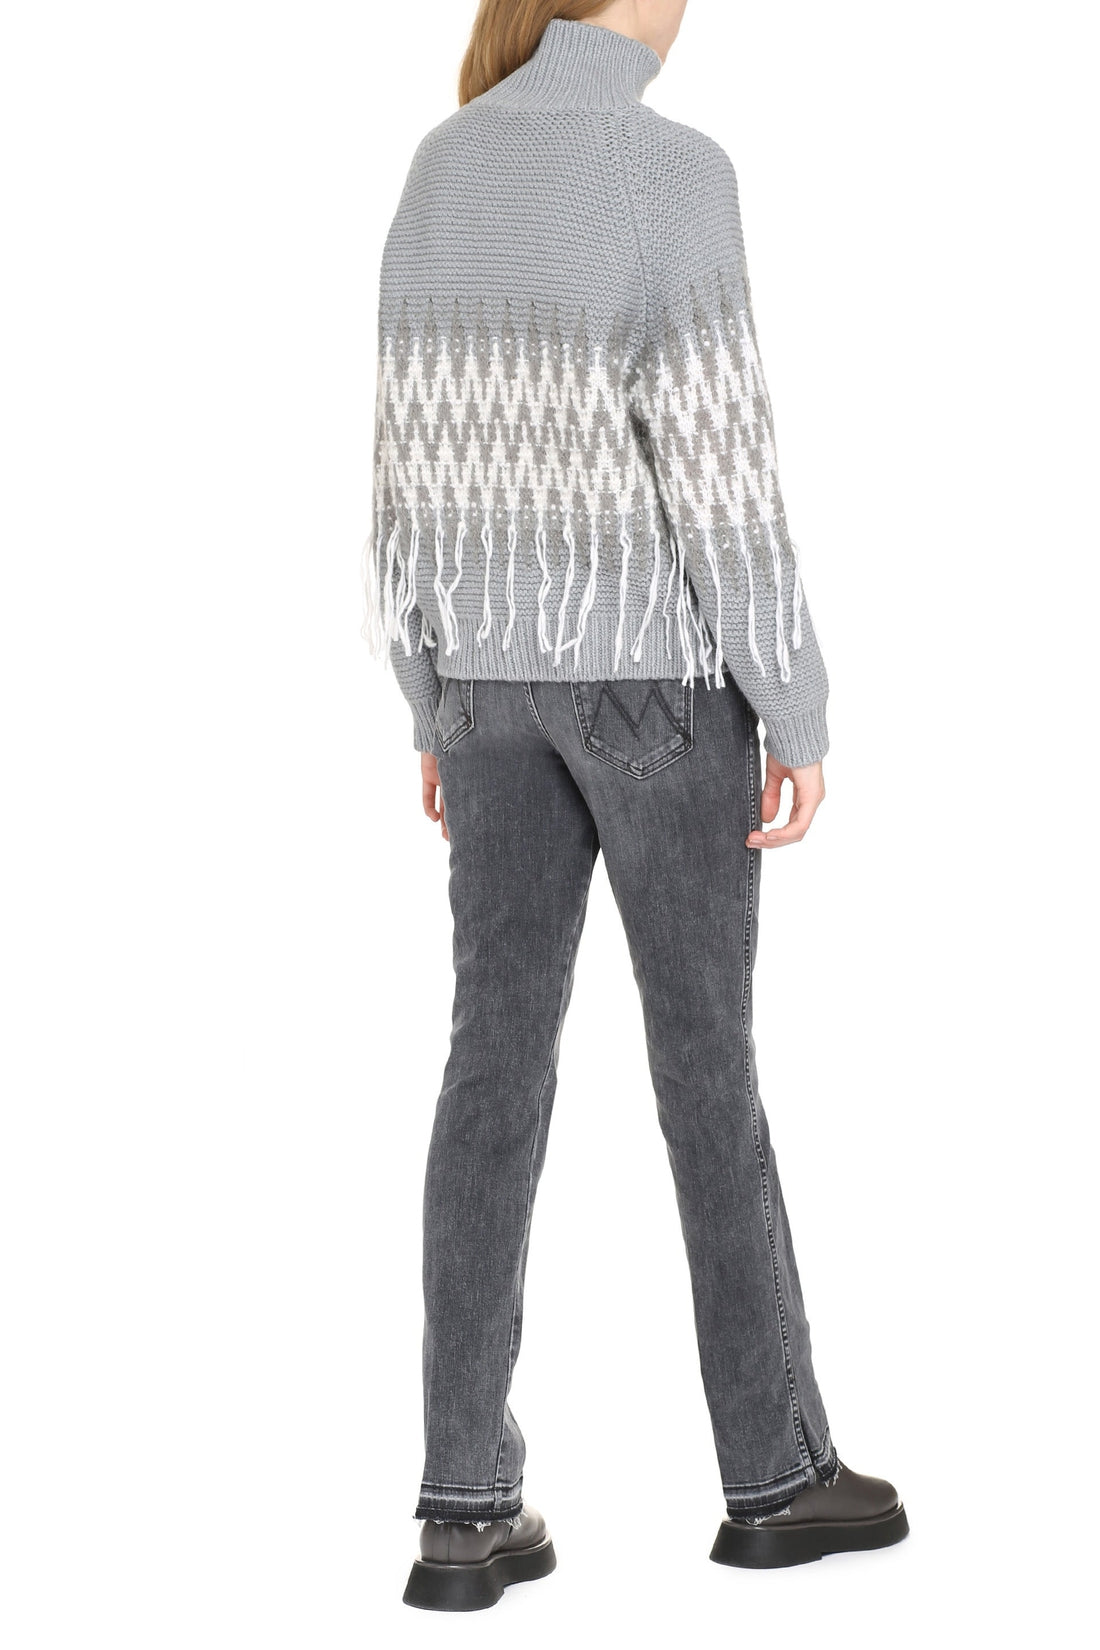 Fabiana Filippi-OUTLET-SALE-Wool blend turtleneck sweater-ARCHIVIST